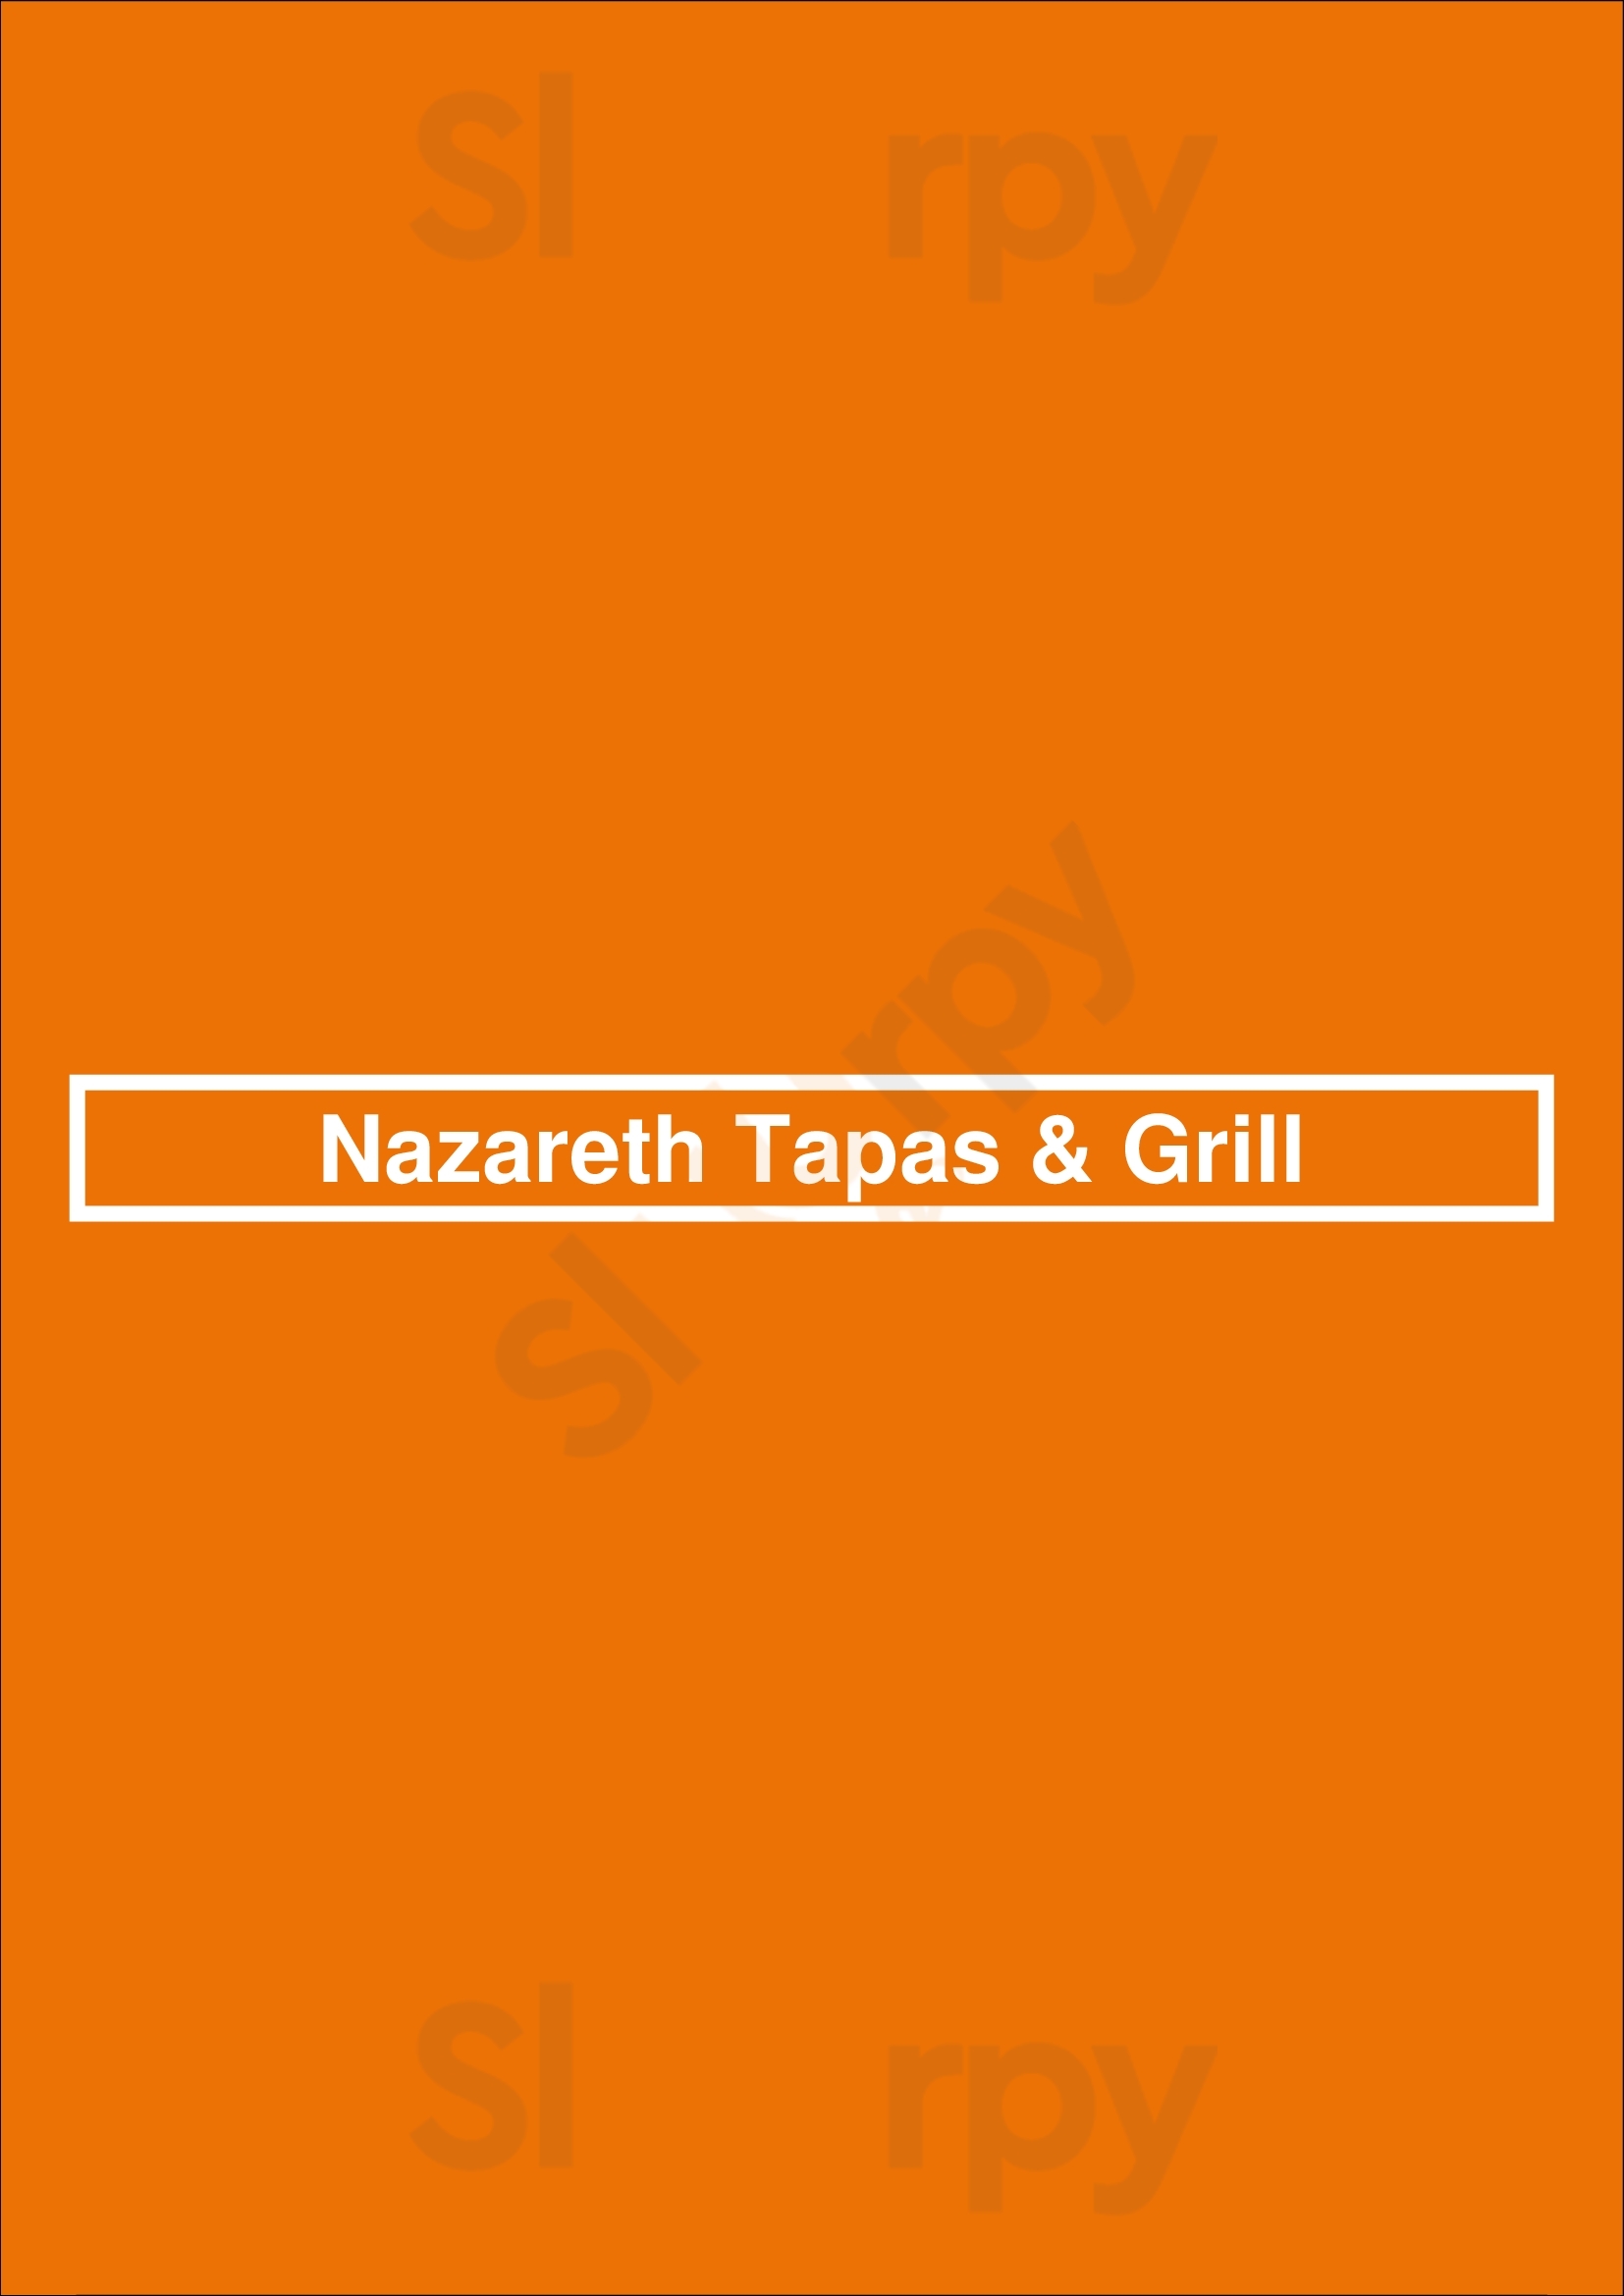 Nazareth Tapas & Grill Drachten Menu - 1